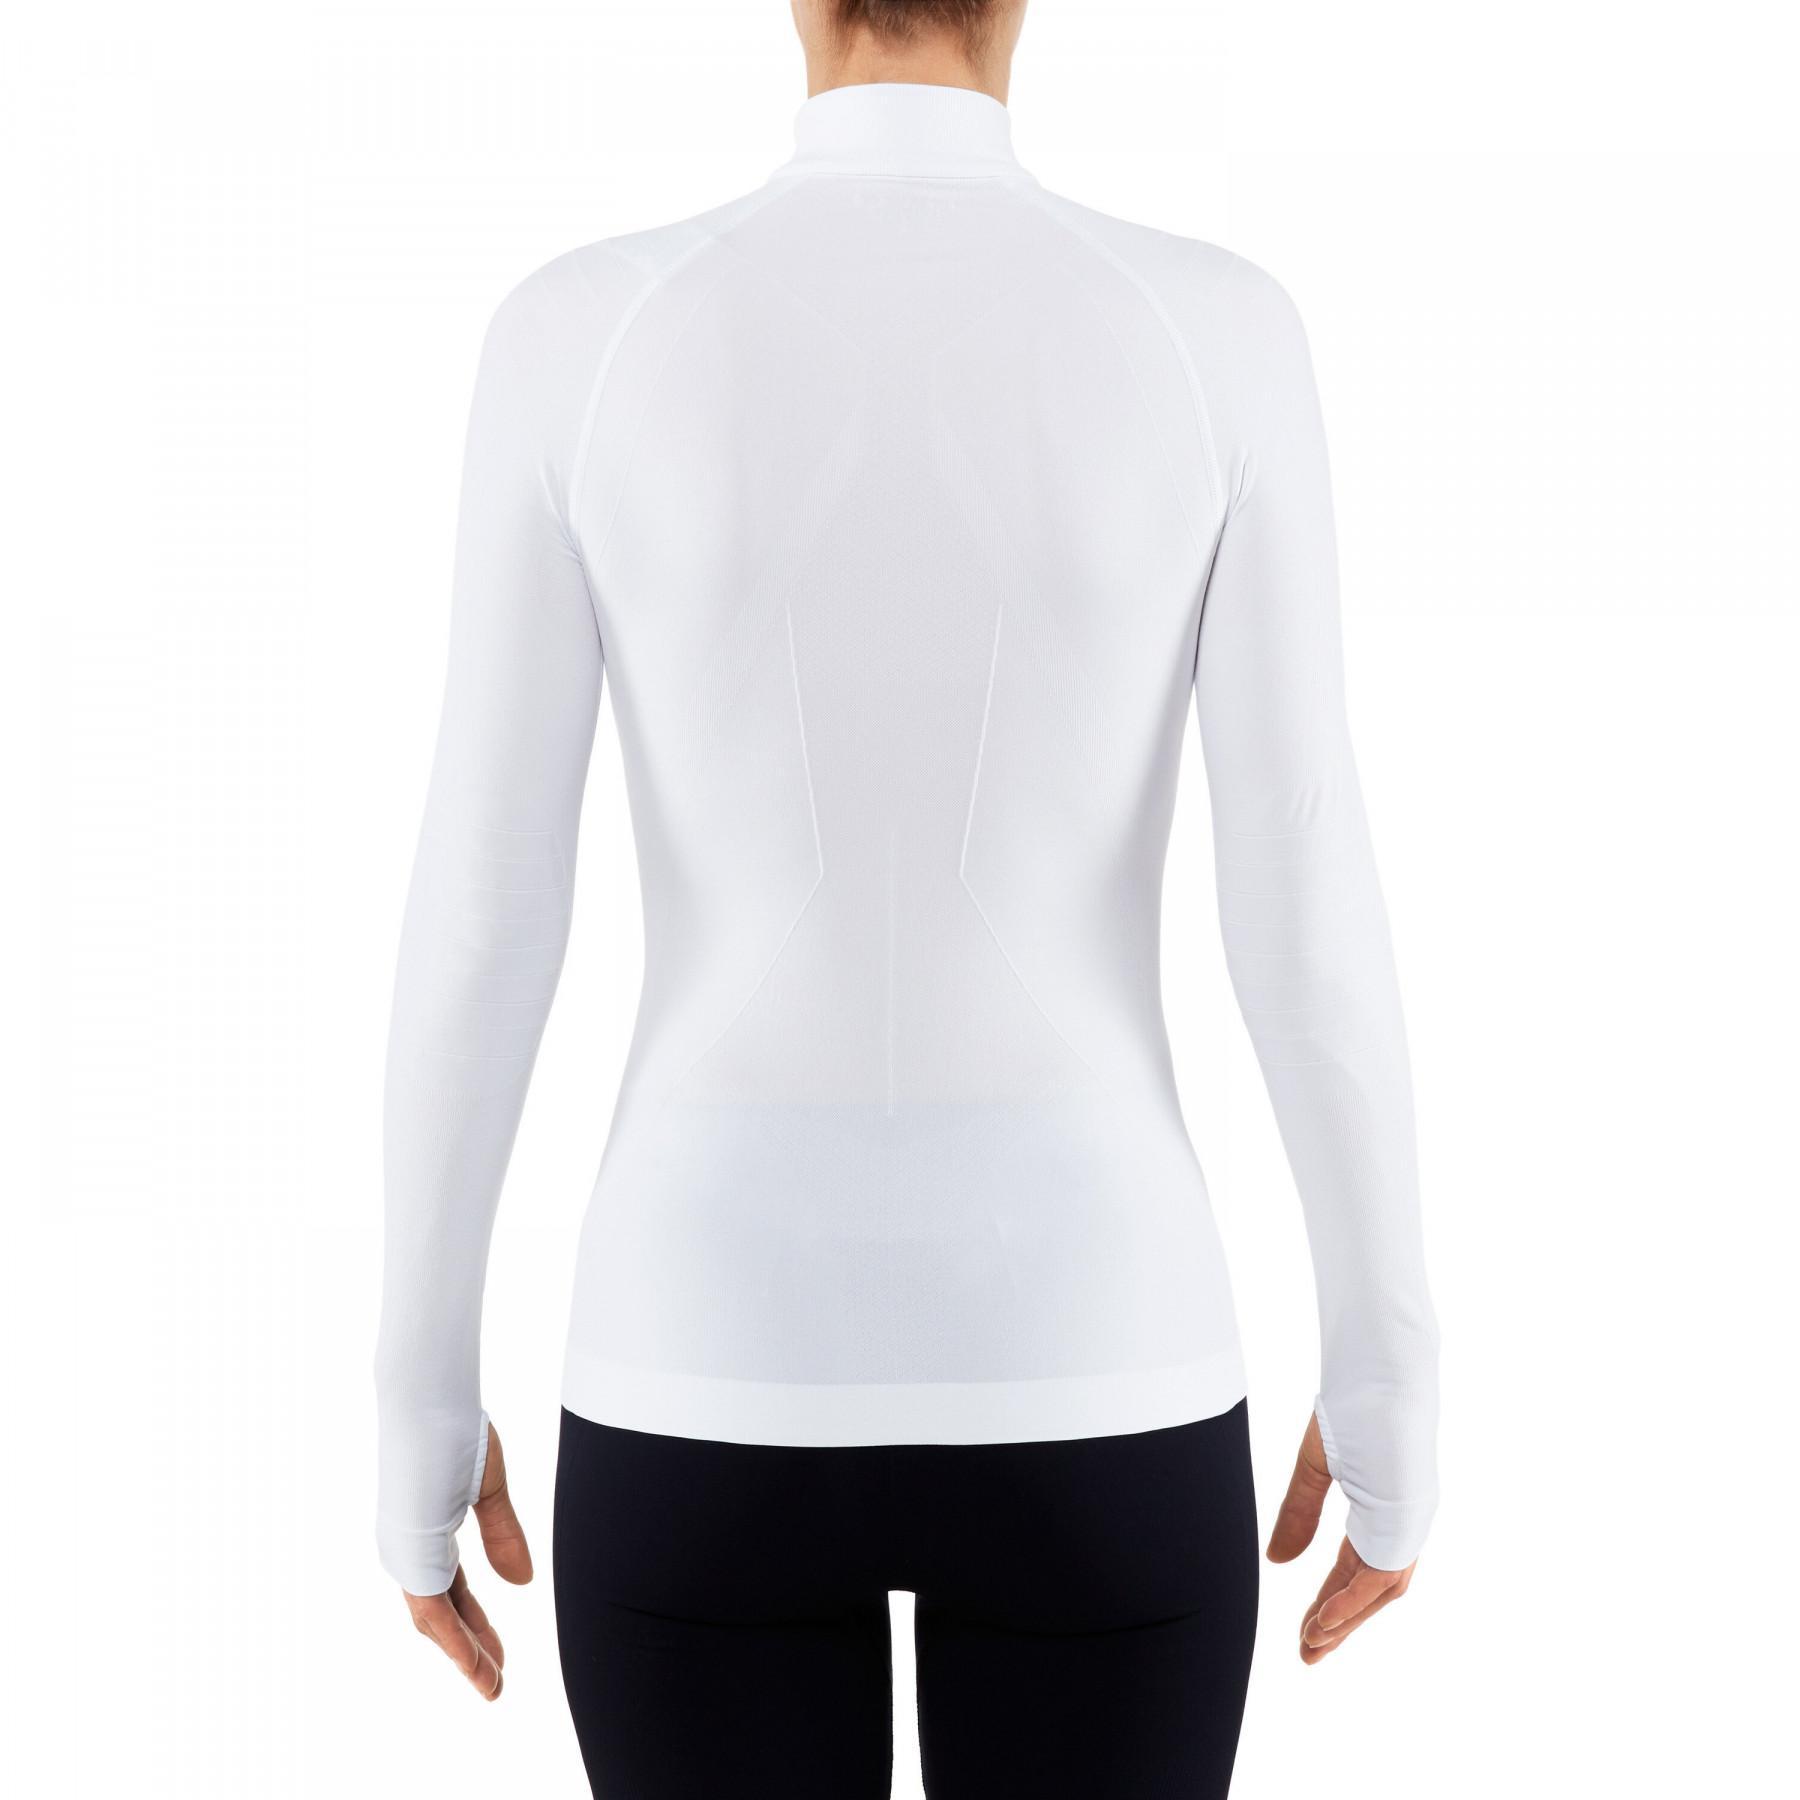 Women's long sleeve T-shirt Falke Warm